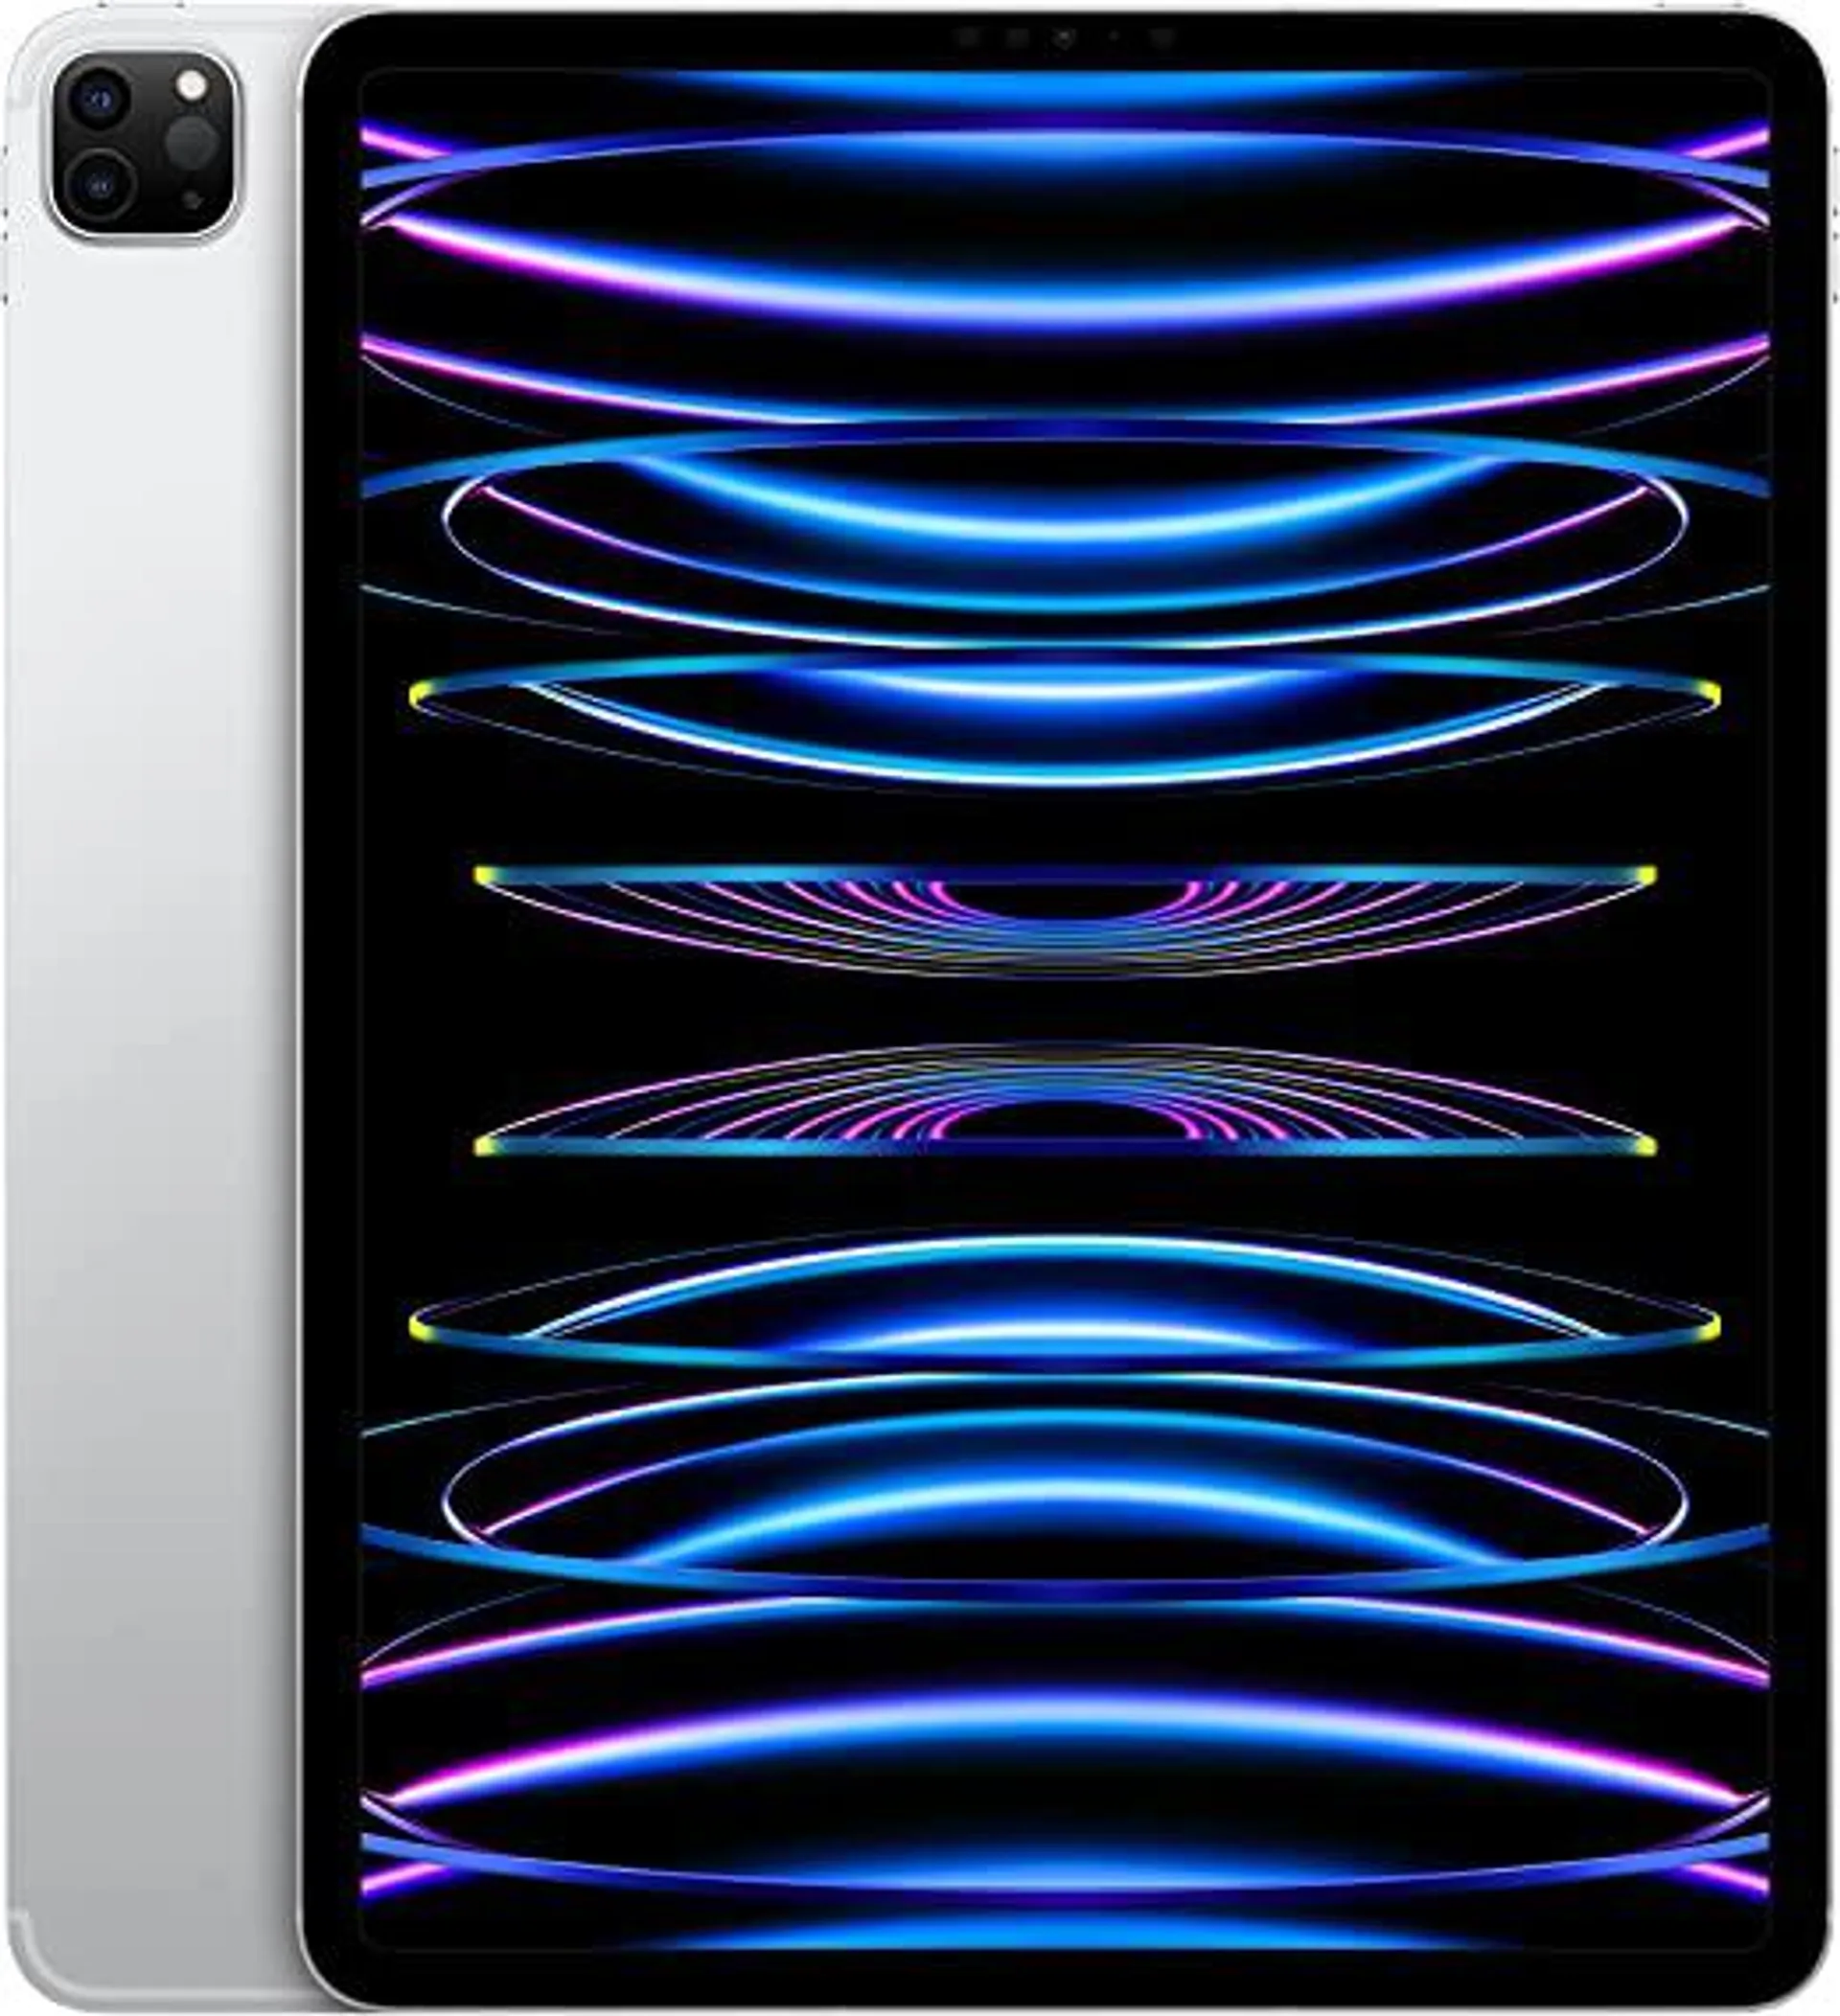 Apple 2022 12.9-inch iPad Pro (Wi-Fi + Cellular, 256GB) - Silver (6th Generation)